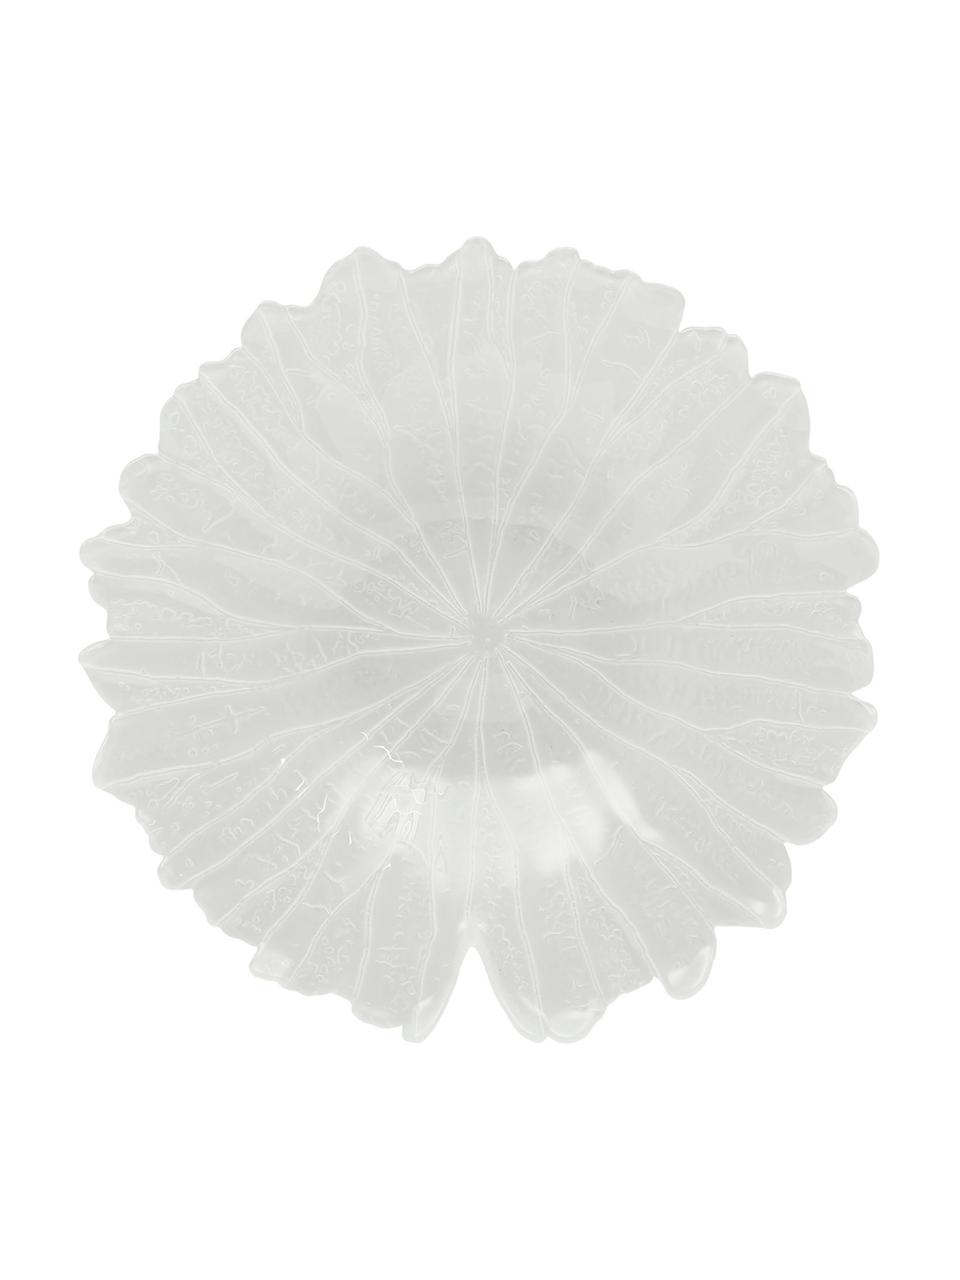 Fuentes de vidrio Botanic, 4 uds., Vidrio, Blanco, Ø 33 x Al 6 cm